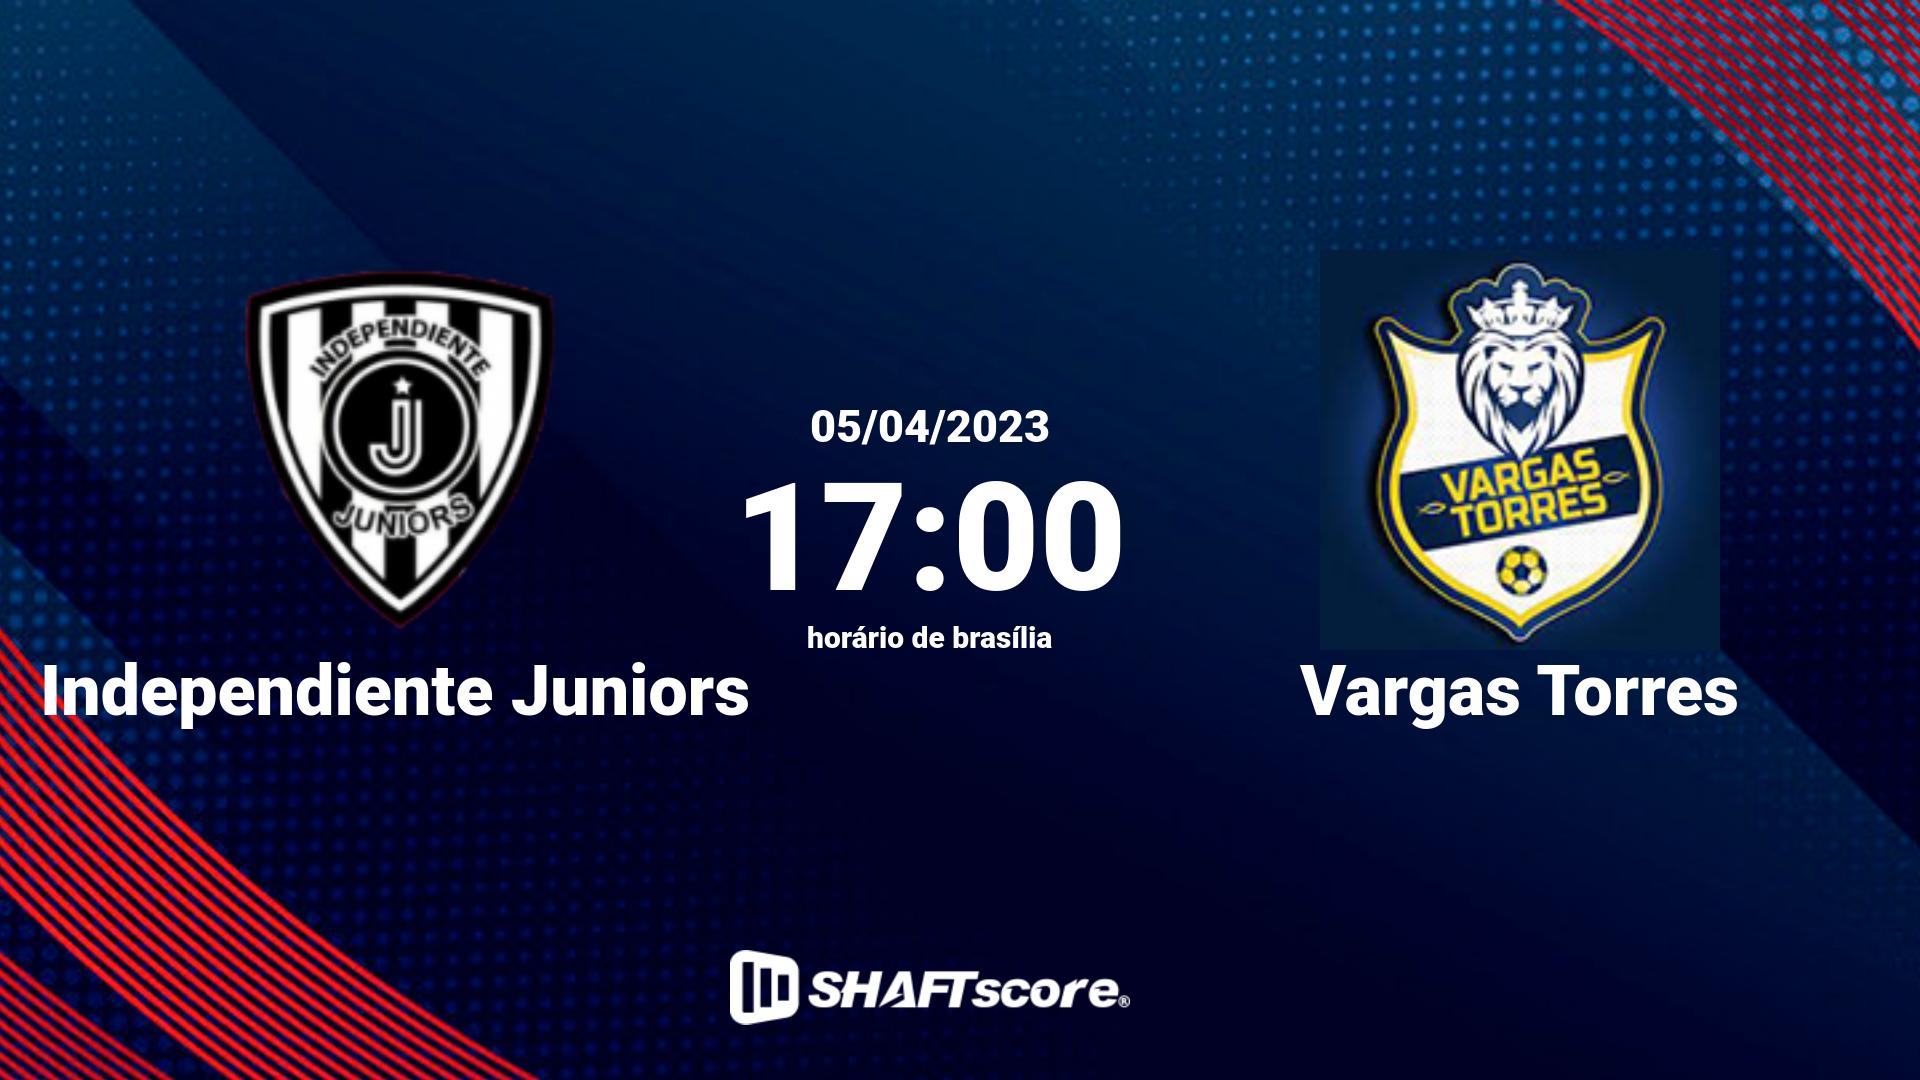 Estatísticas do jogo Independiente Juniors vs Vargas Torres 05.04 17:00